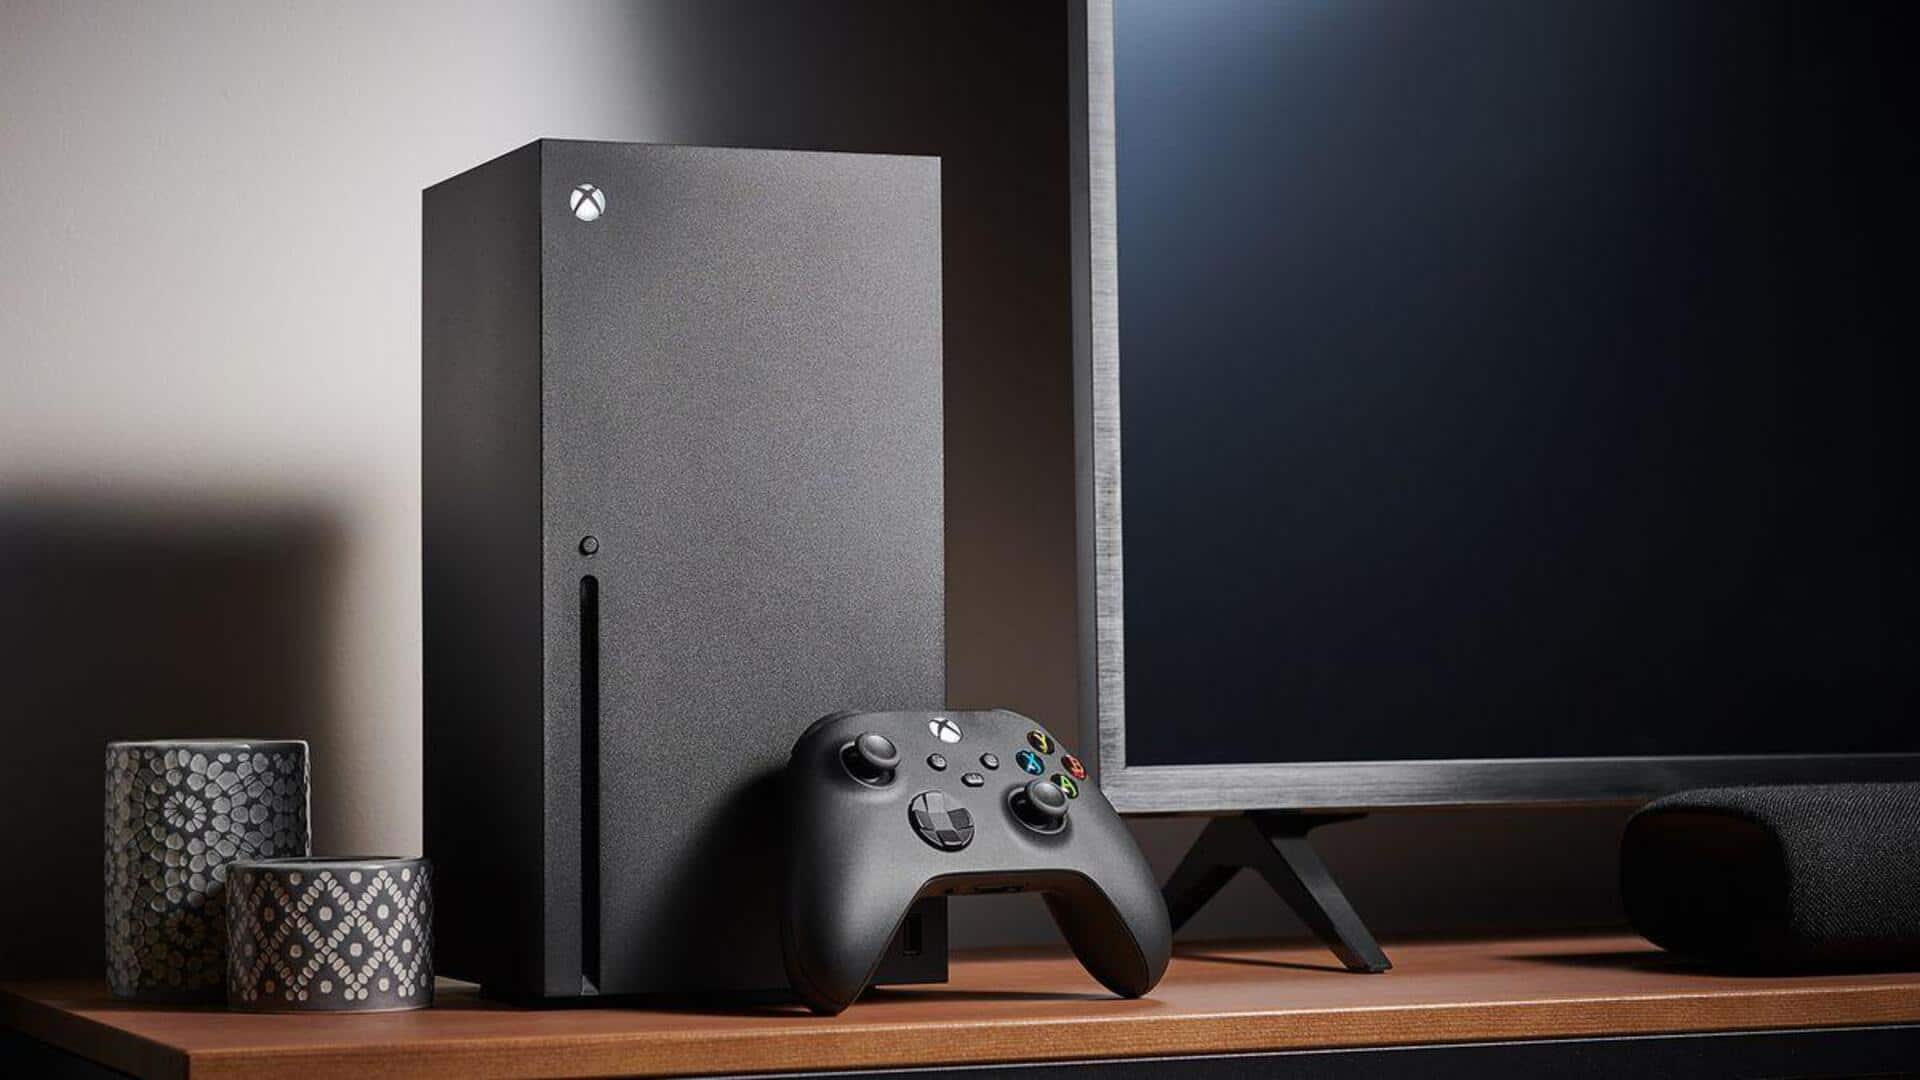 Microsoft rumored to launch all-digital Xbox Series X soon